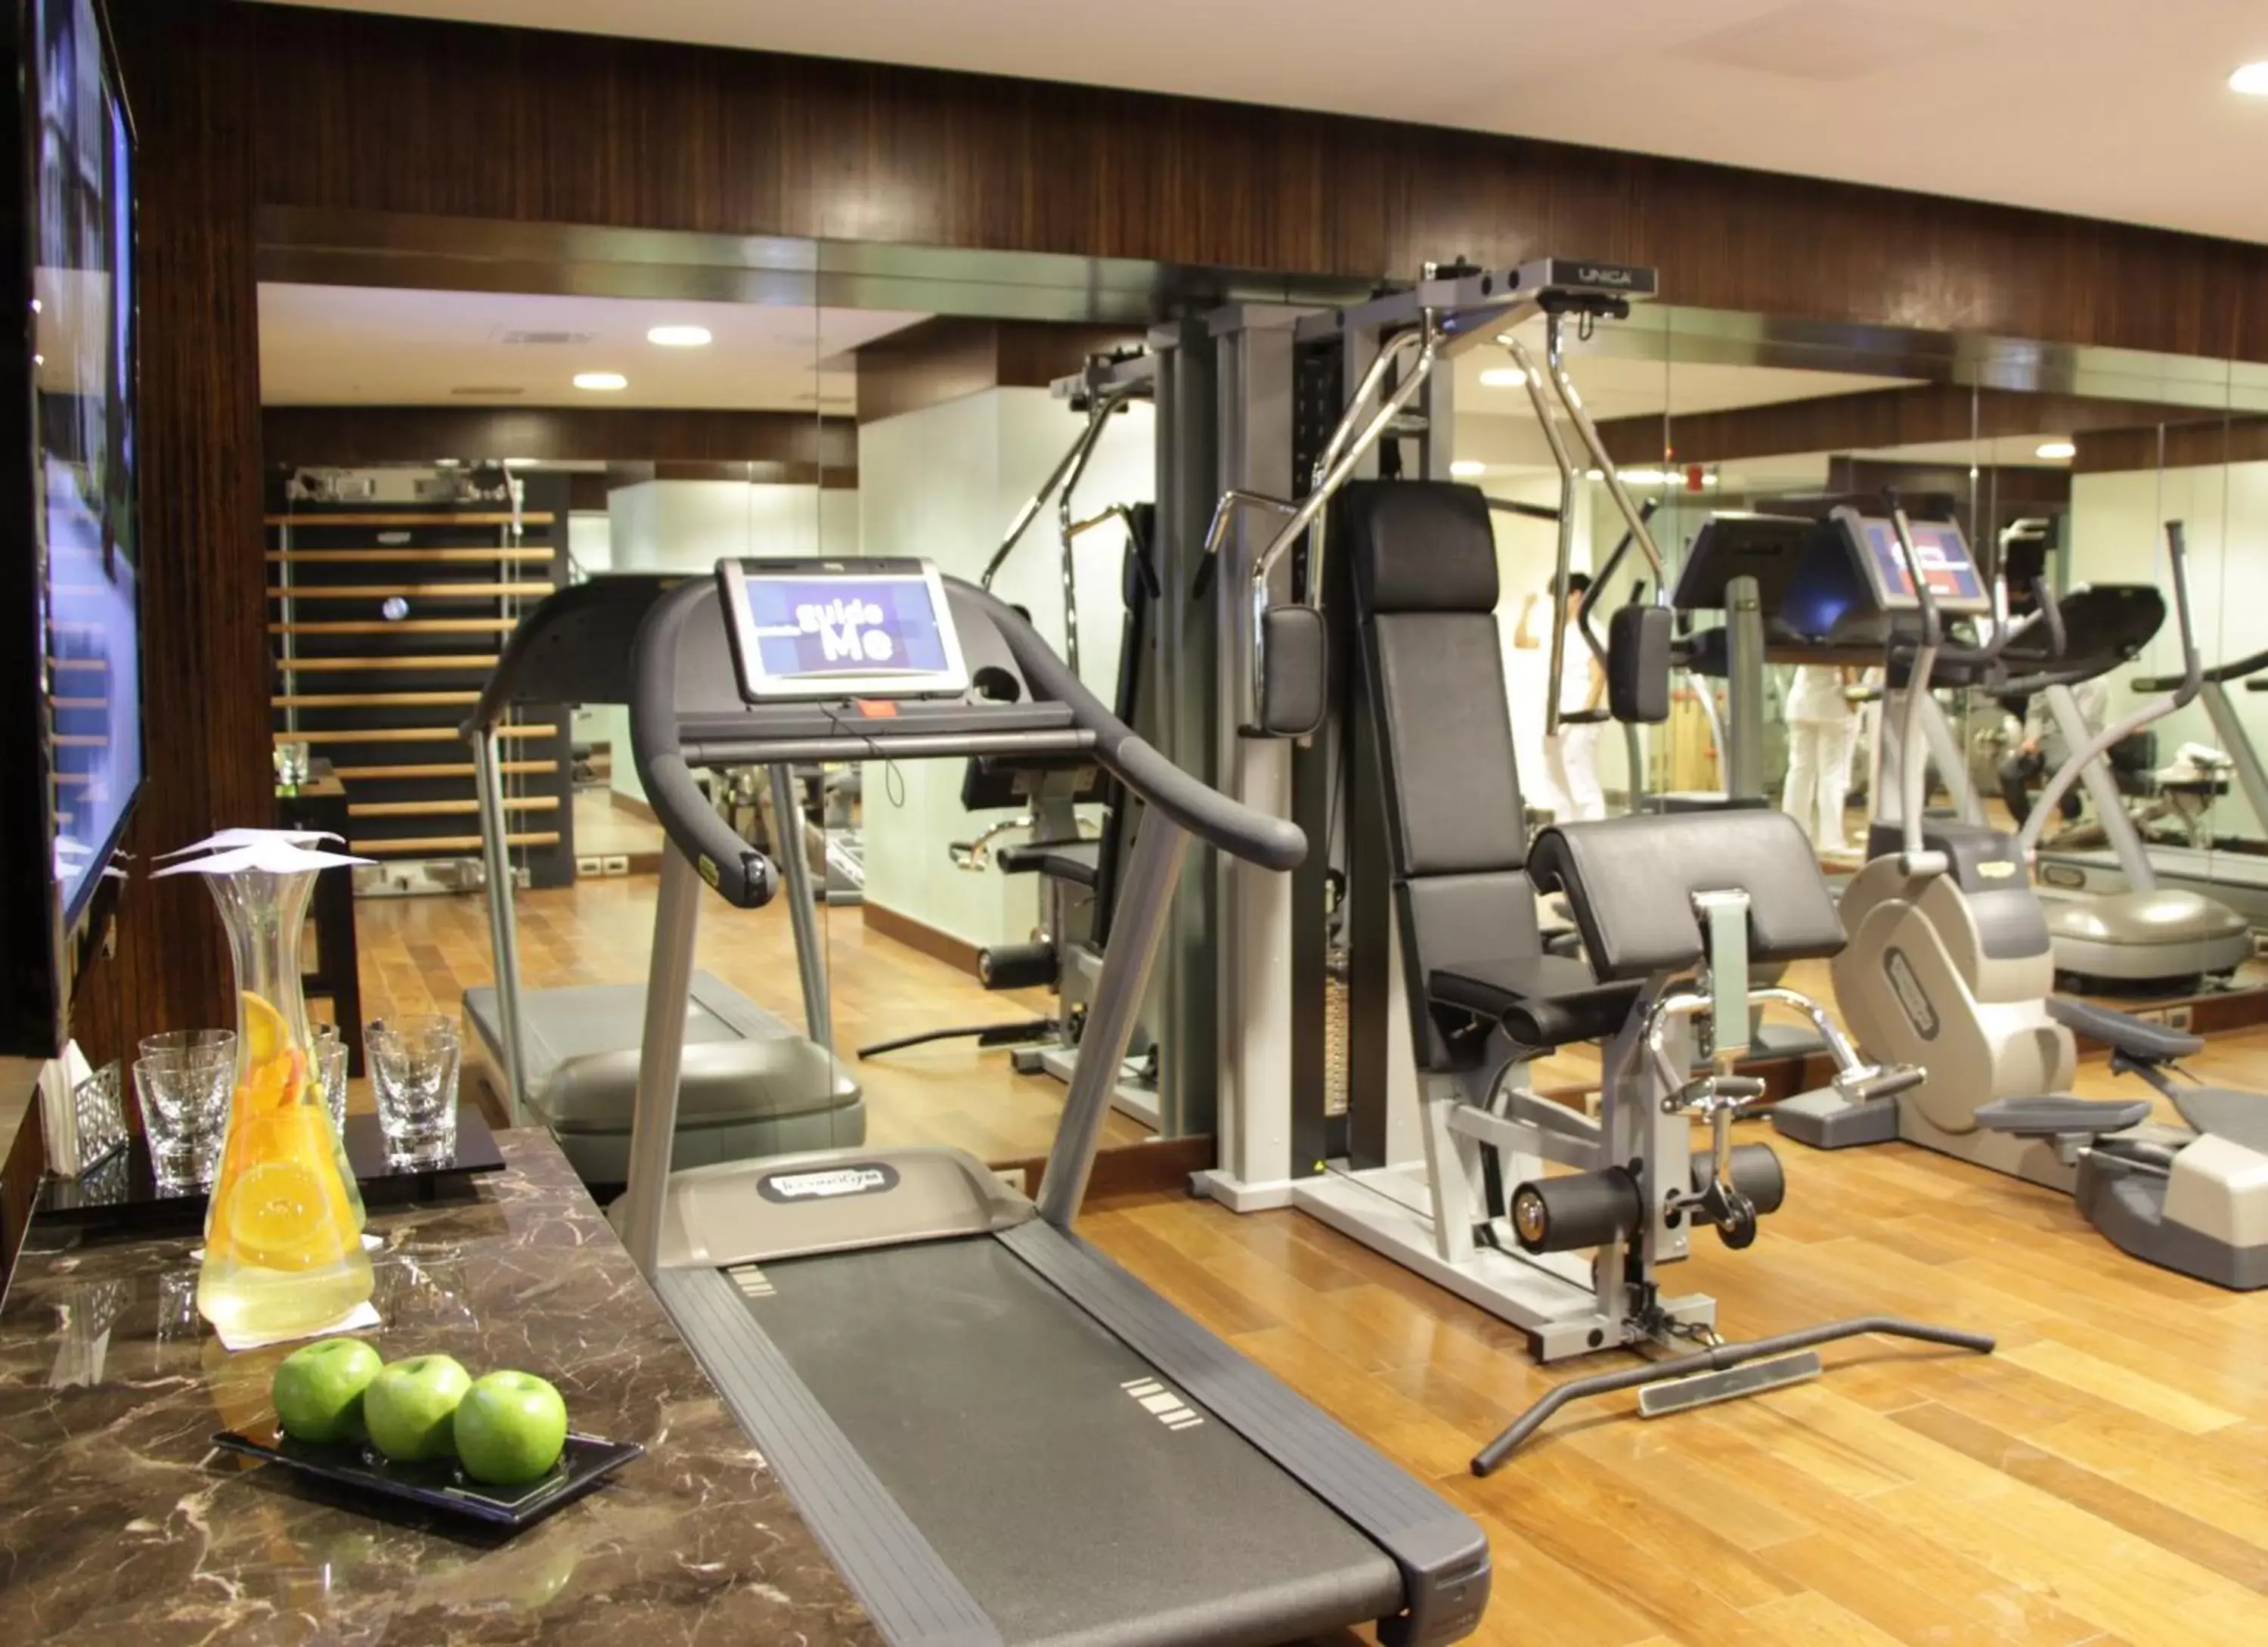 Fitness centre/facilities, Fitness Center/Facilities in Sofitel Montevideo Casino Carrasco & Spa